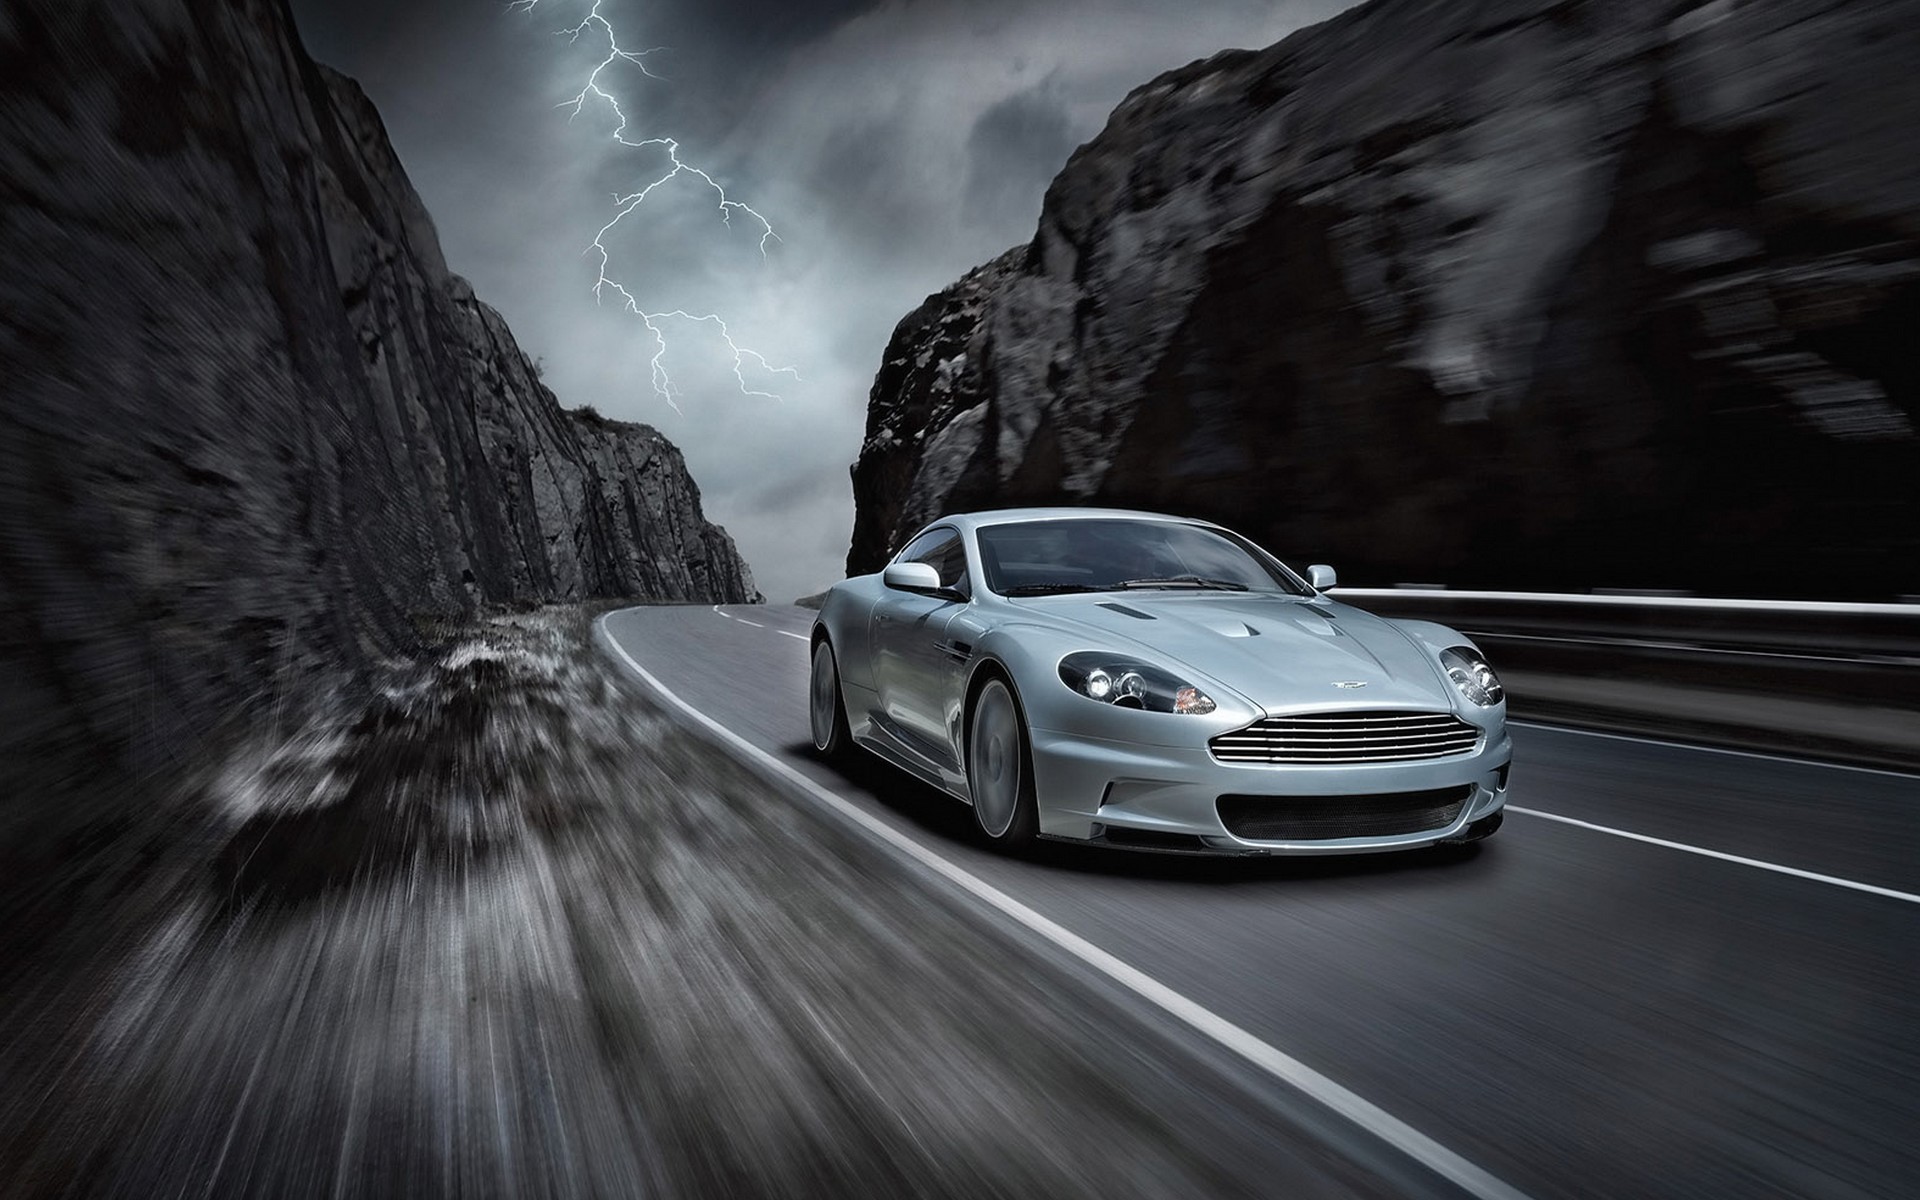 mountains, cars, Aston Martin, grey, roads, vehicles, Aston Martin DBS - desktop wallpaper